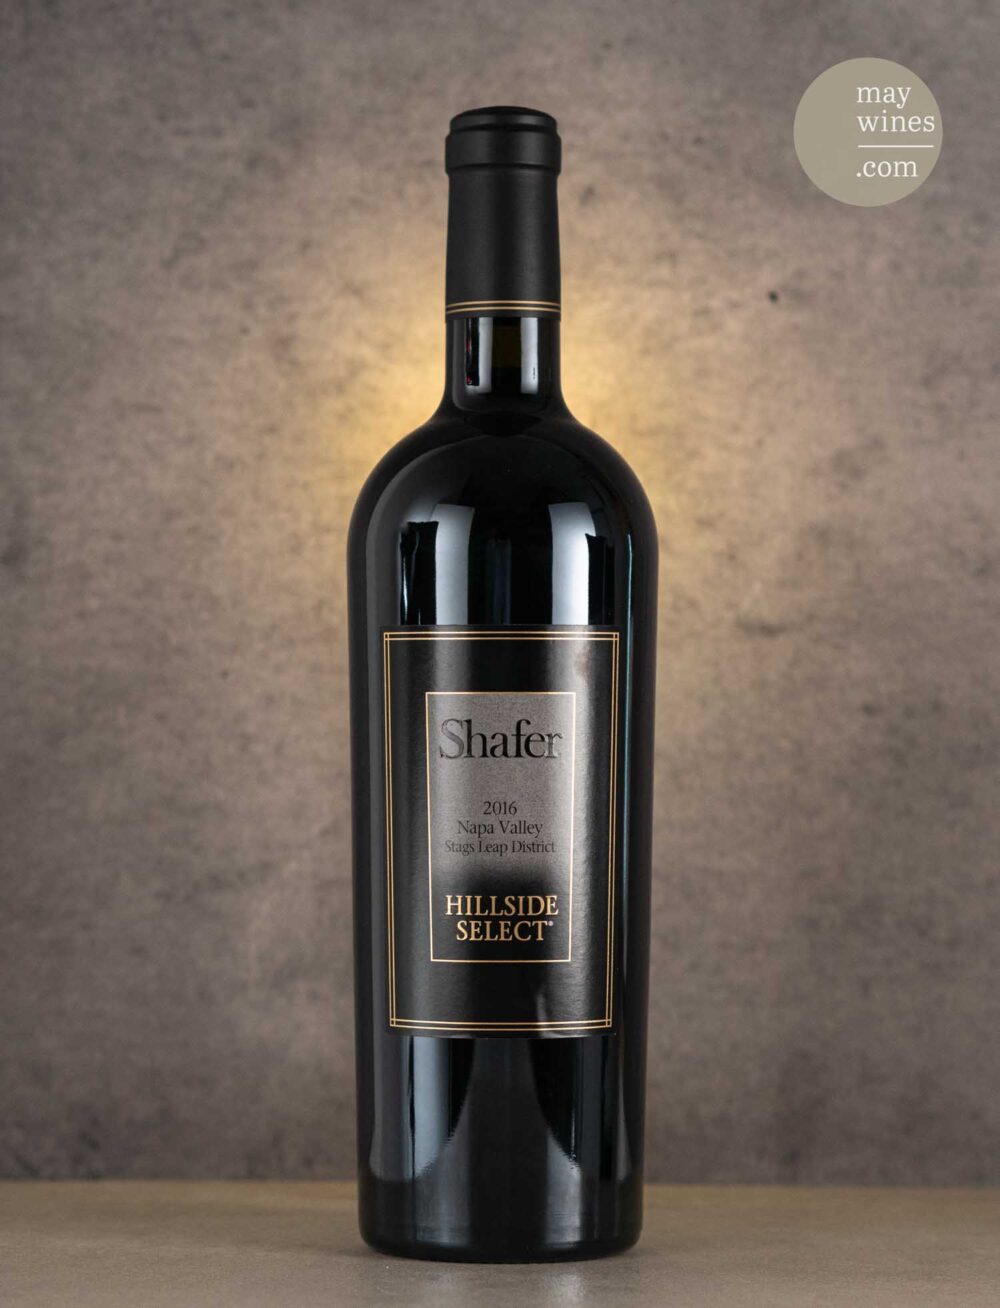 May Wines – Rotwein – 2016 Hillside Select Cabernet Sauvignon - Shafer Vineyards